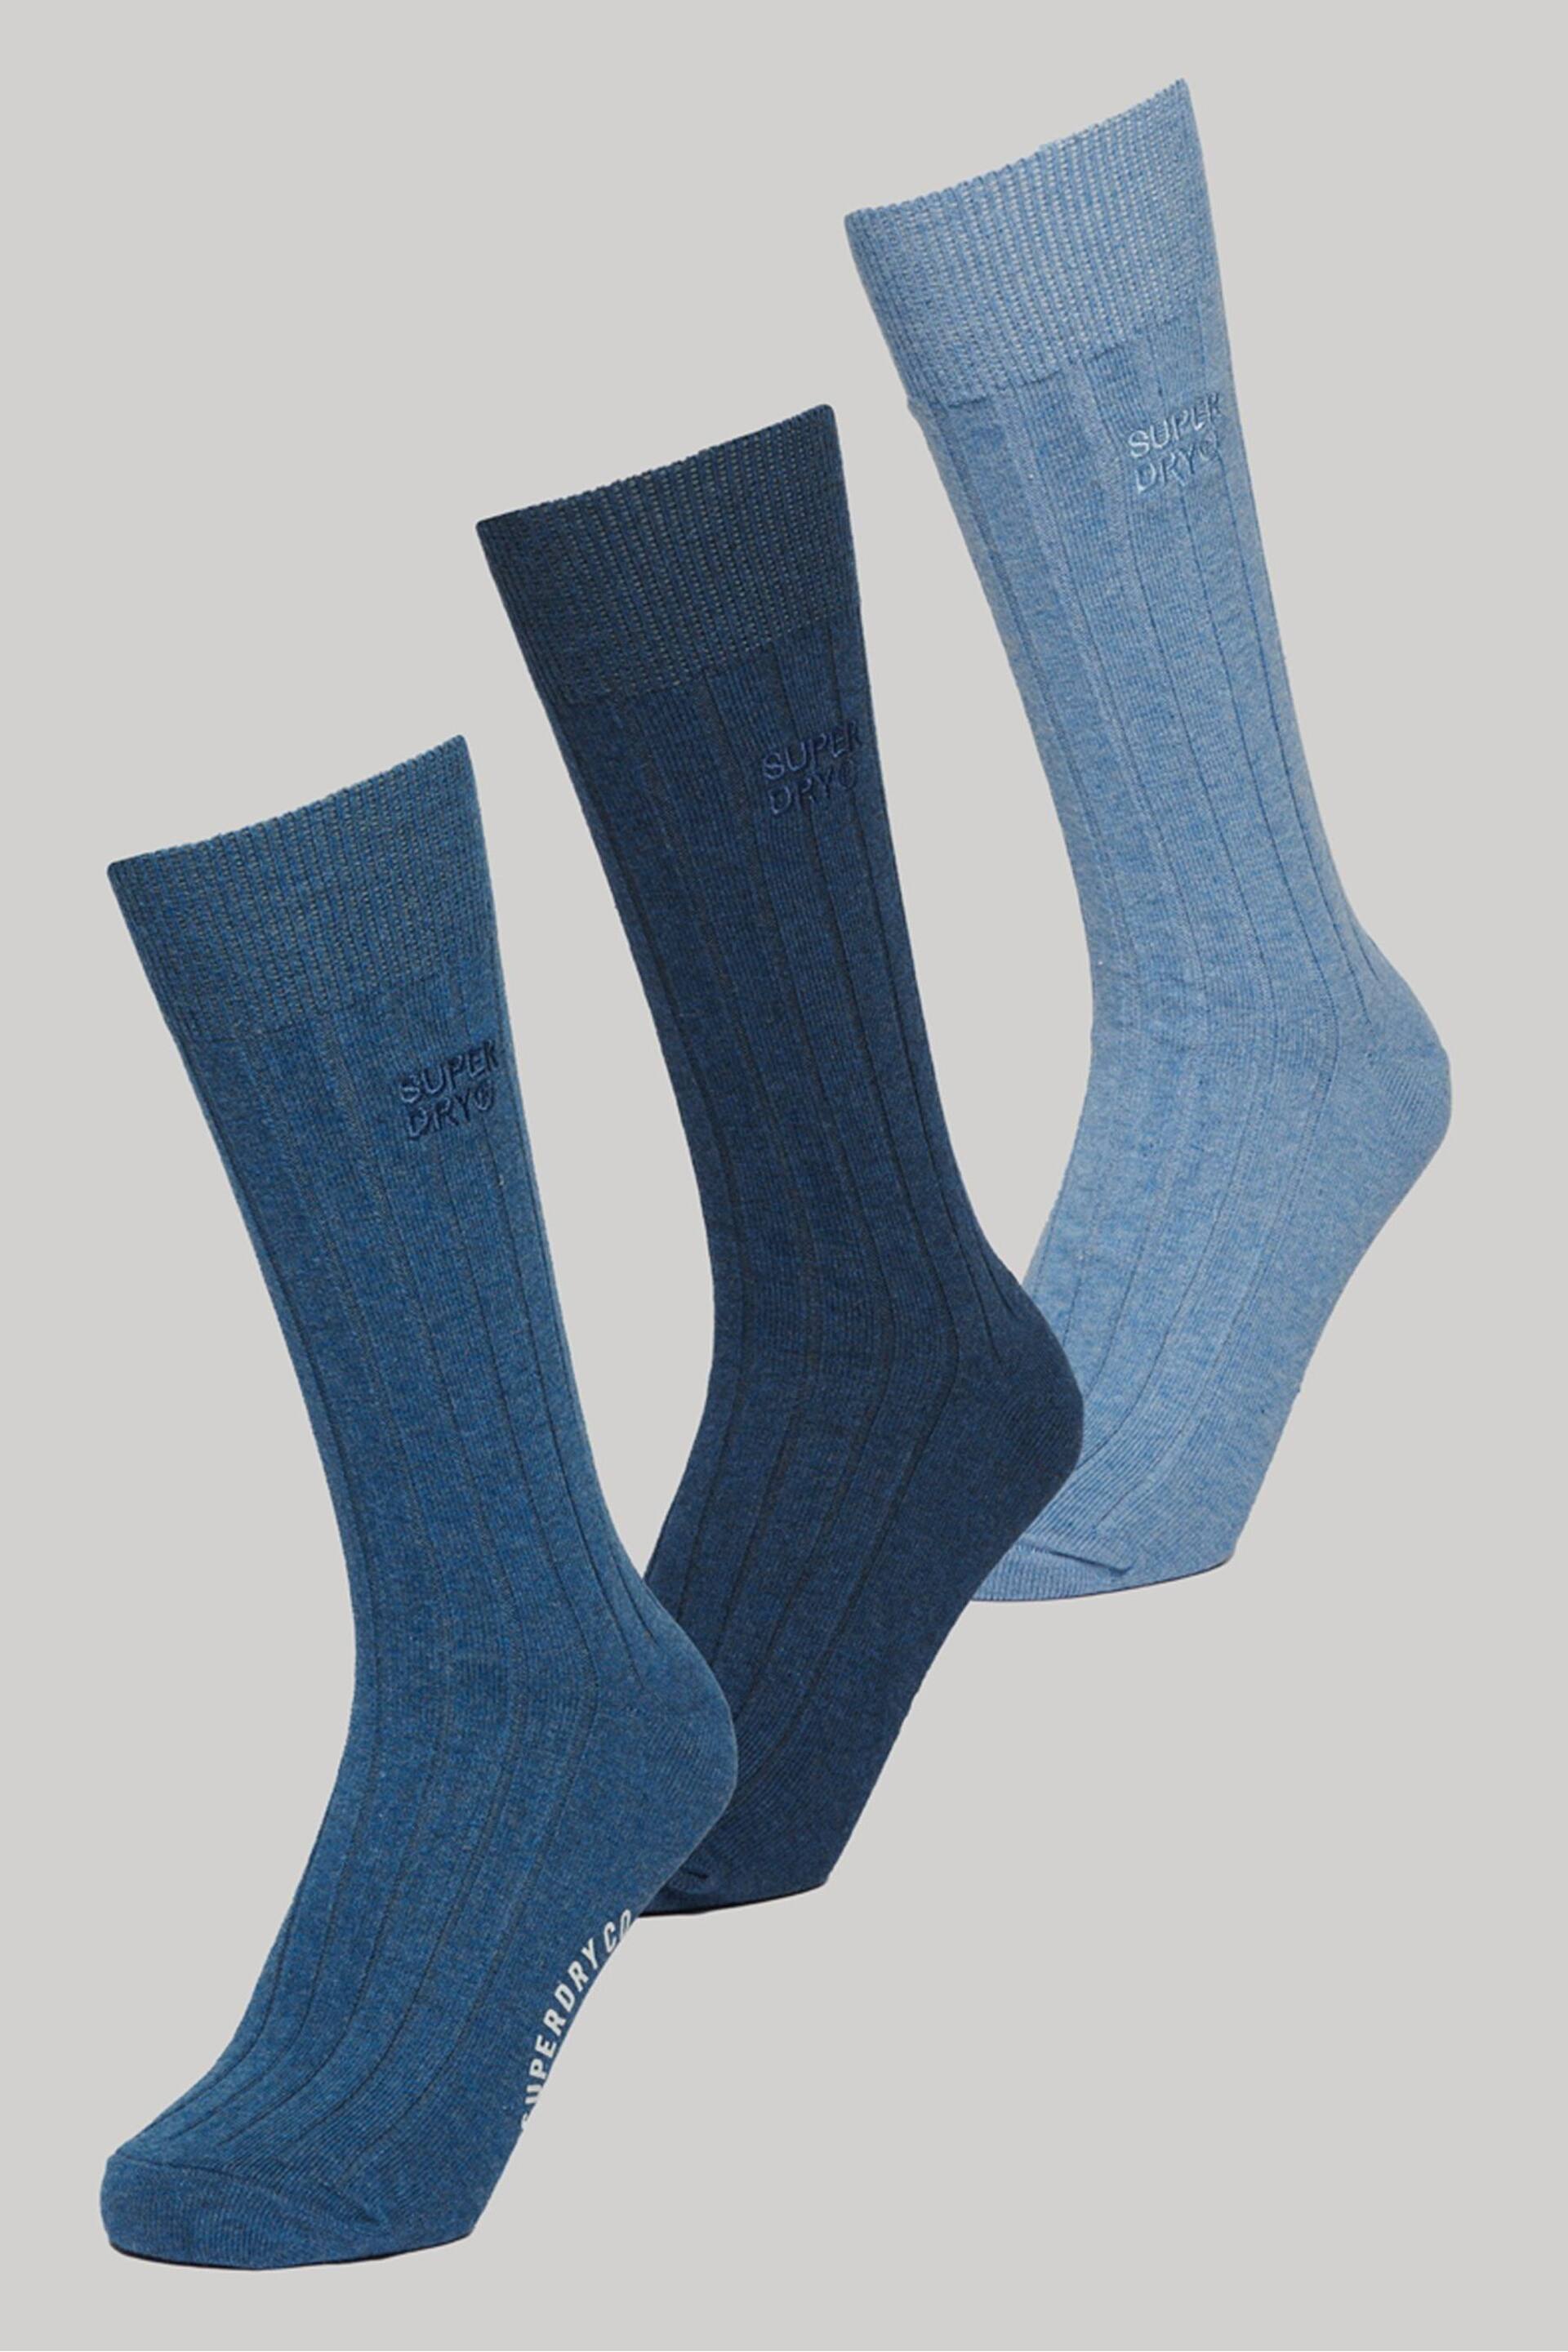 Superdry Light Blue Organic Cotton Unisex Core Rib Crew Socks 3 Pack - Image 1 of 5